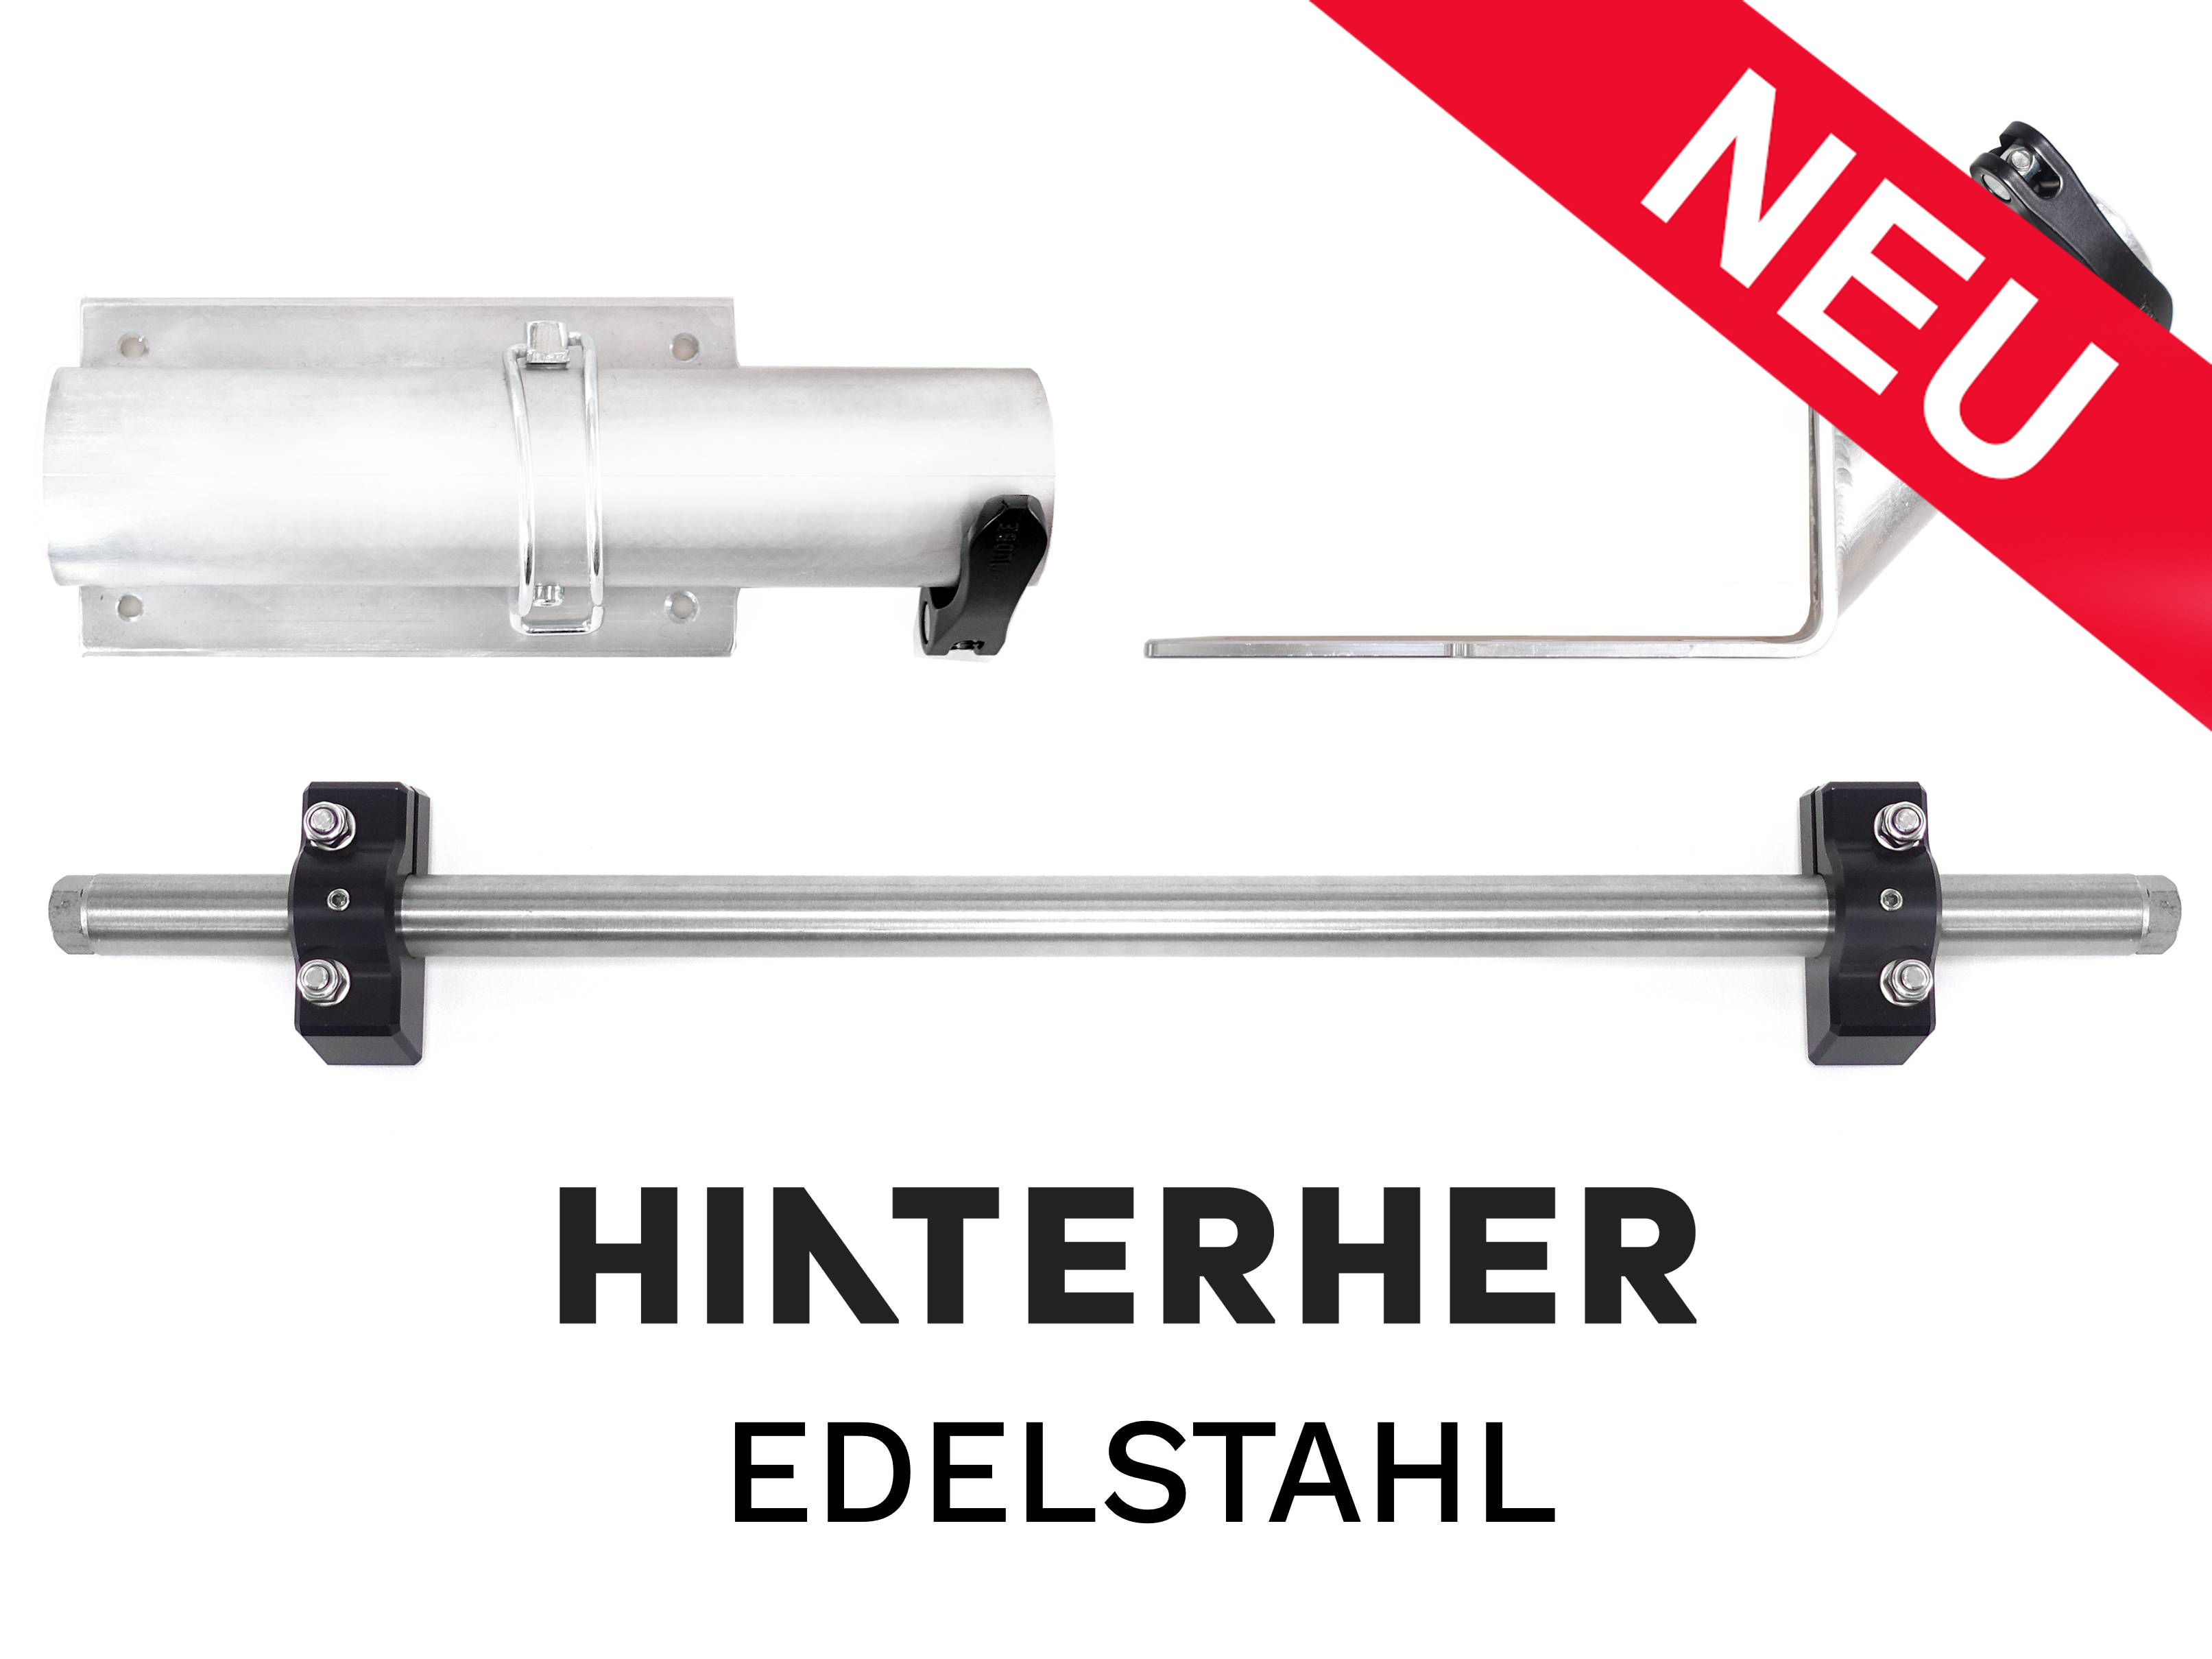 Upgrade SL-Edelstahl-Deichsel (Hinterher-Anschluss) inkl. Handwagenfunktion Hxxxl light